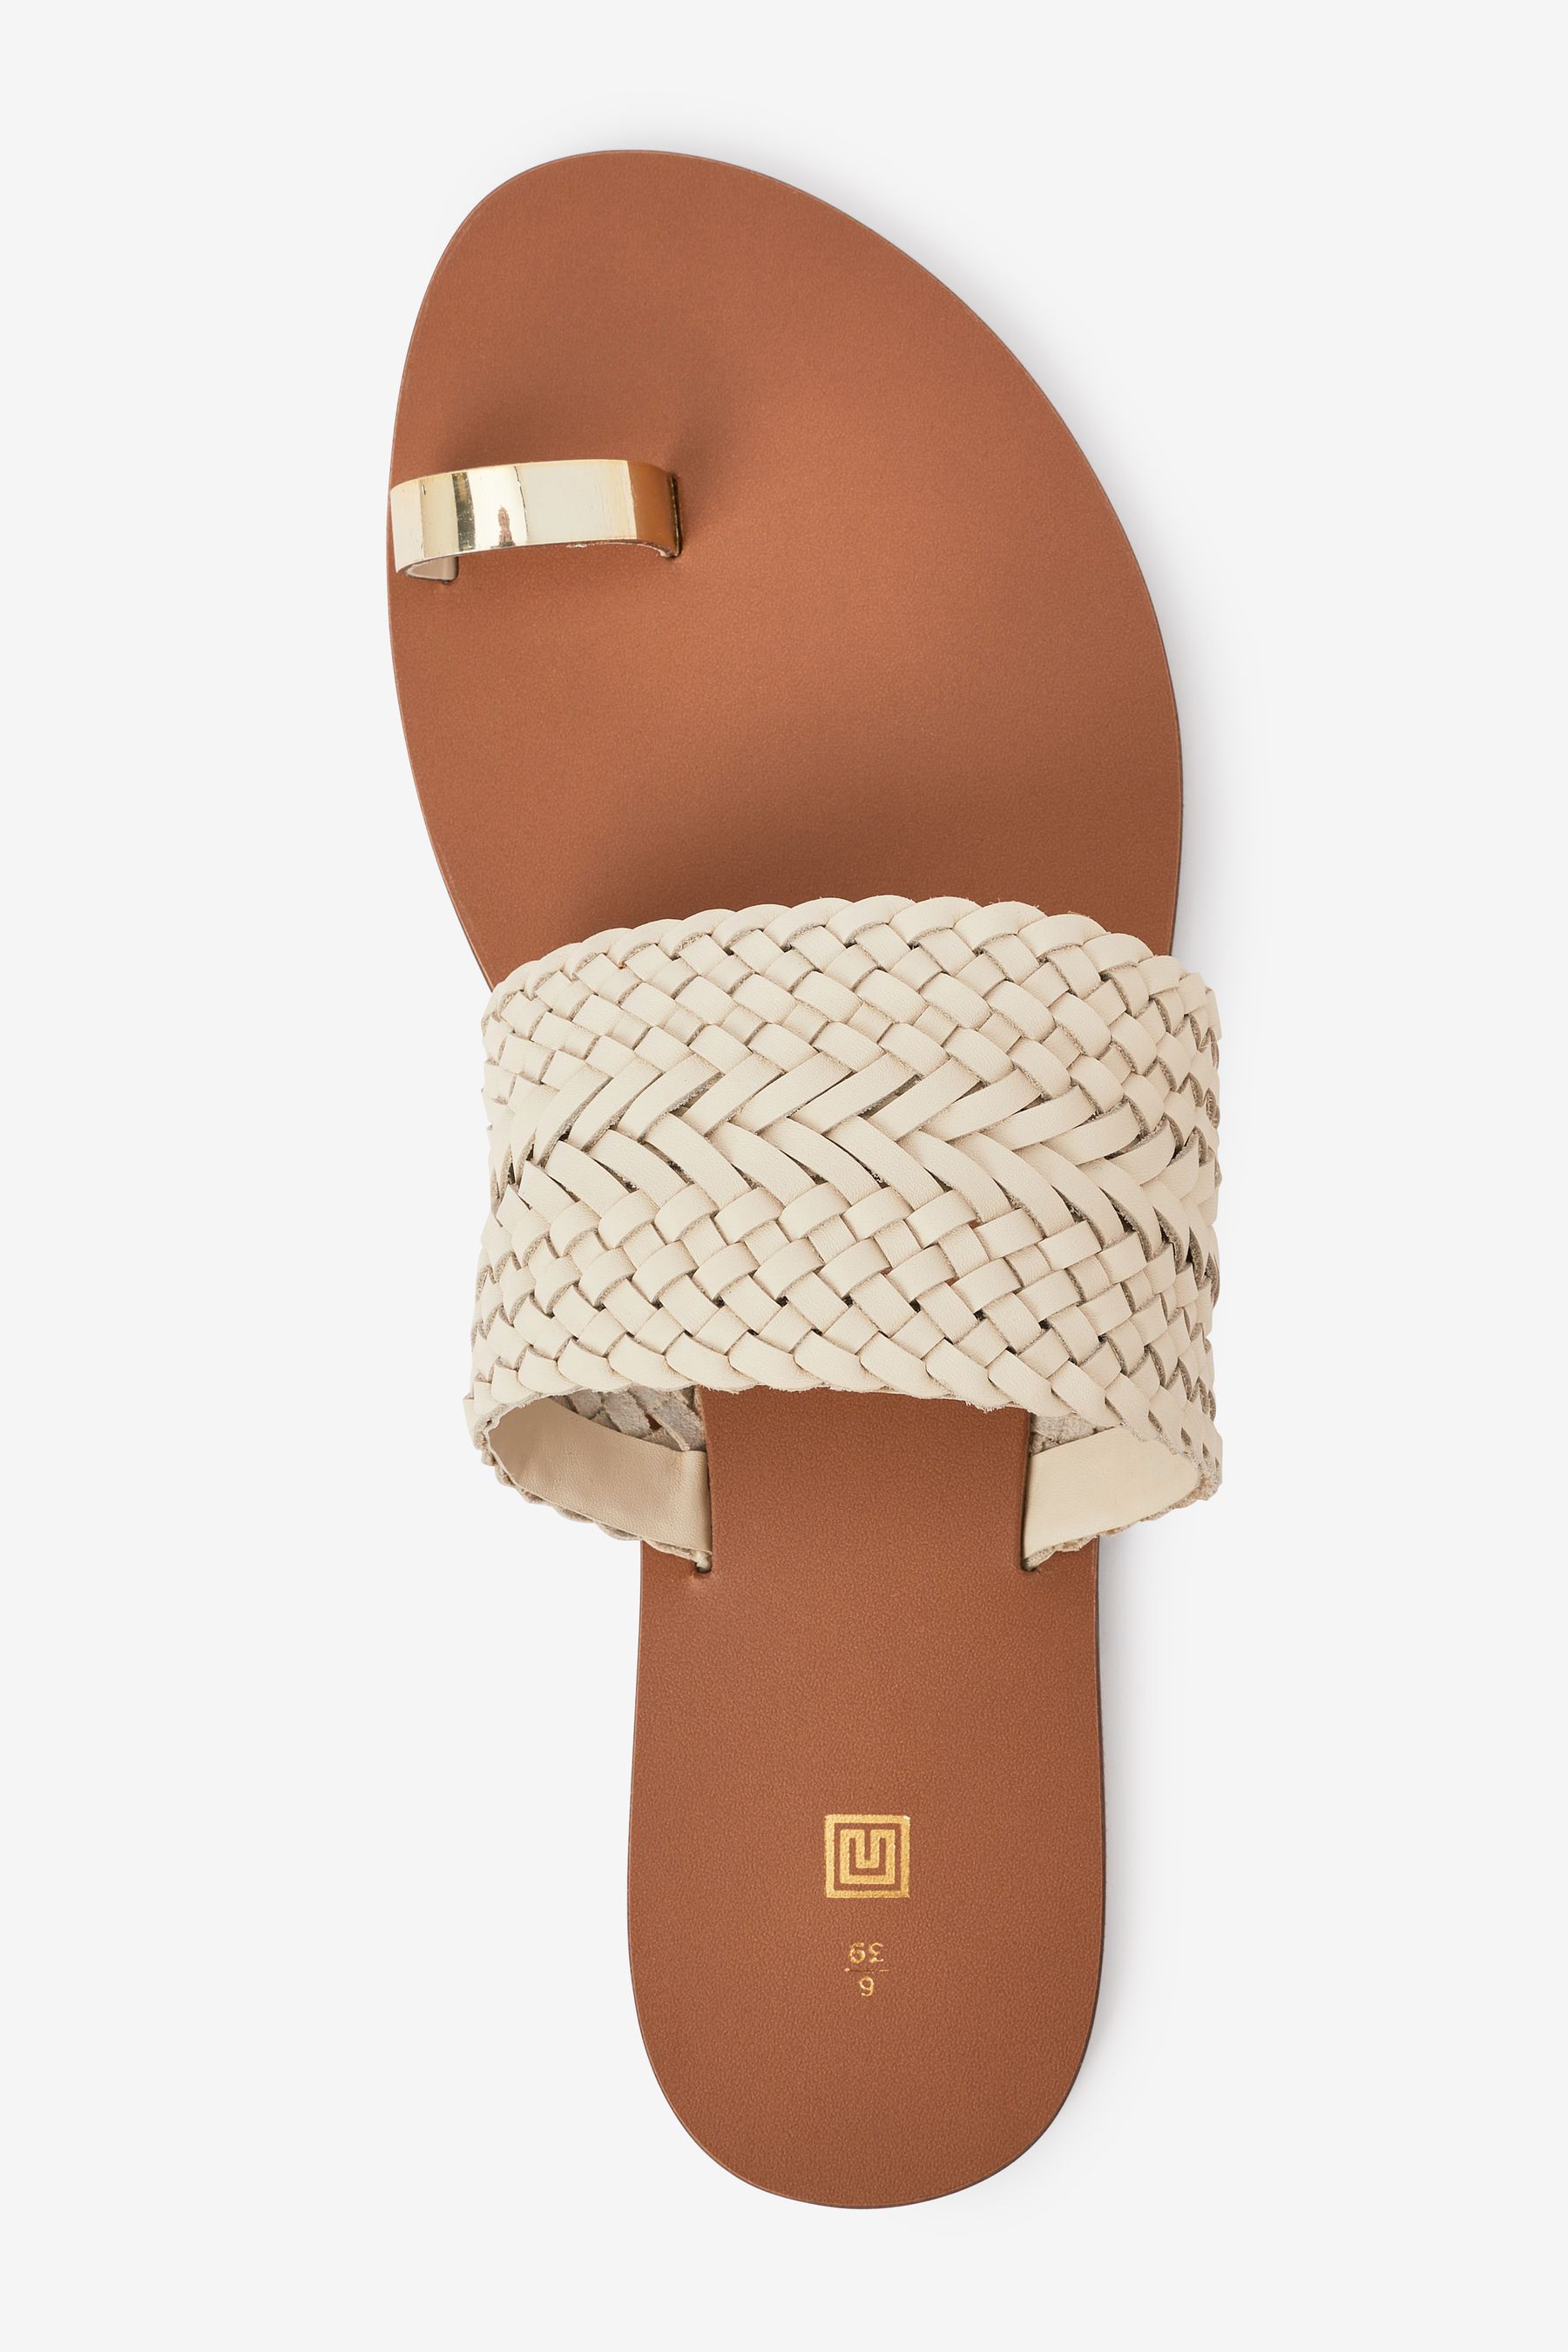 Bata Mens Toe Ring Leather Athletic  Outdoor Sandals  Amazonin Fashion